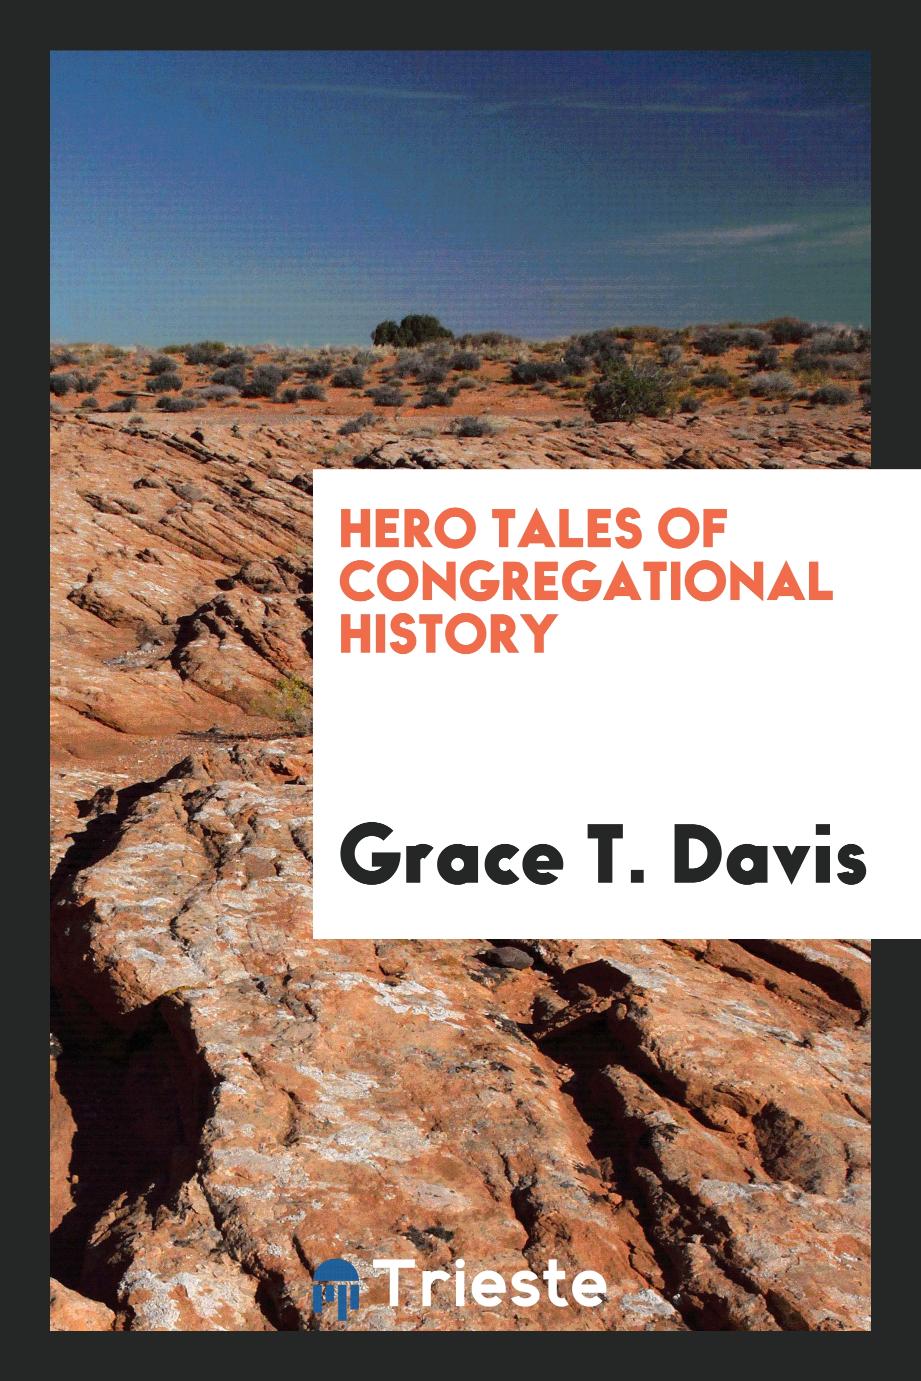 Grace T. Davis - Hero Tales of Congregational History